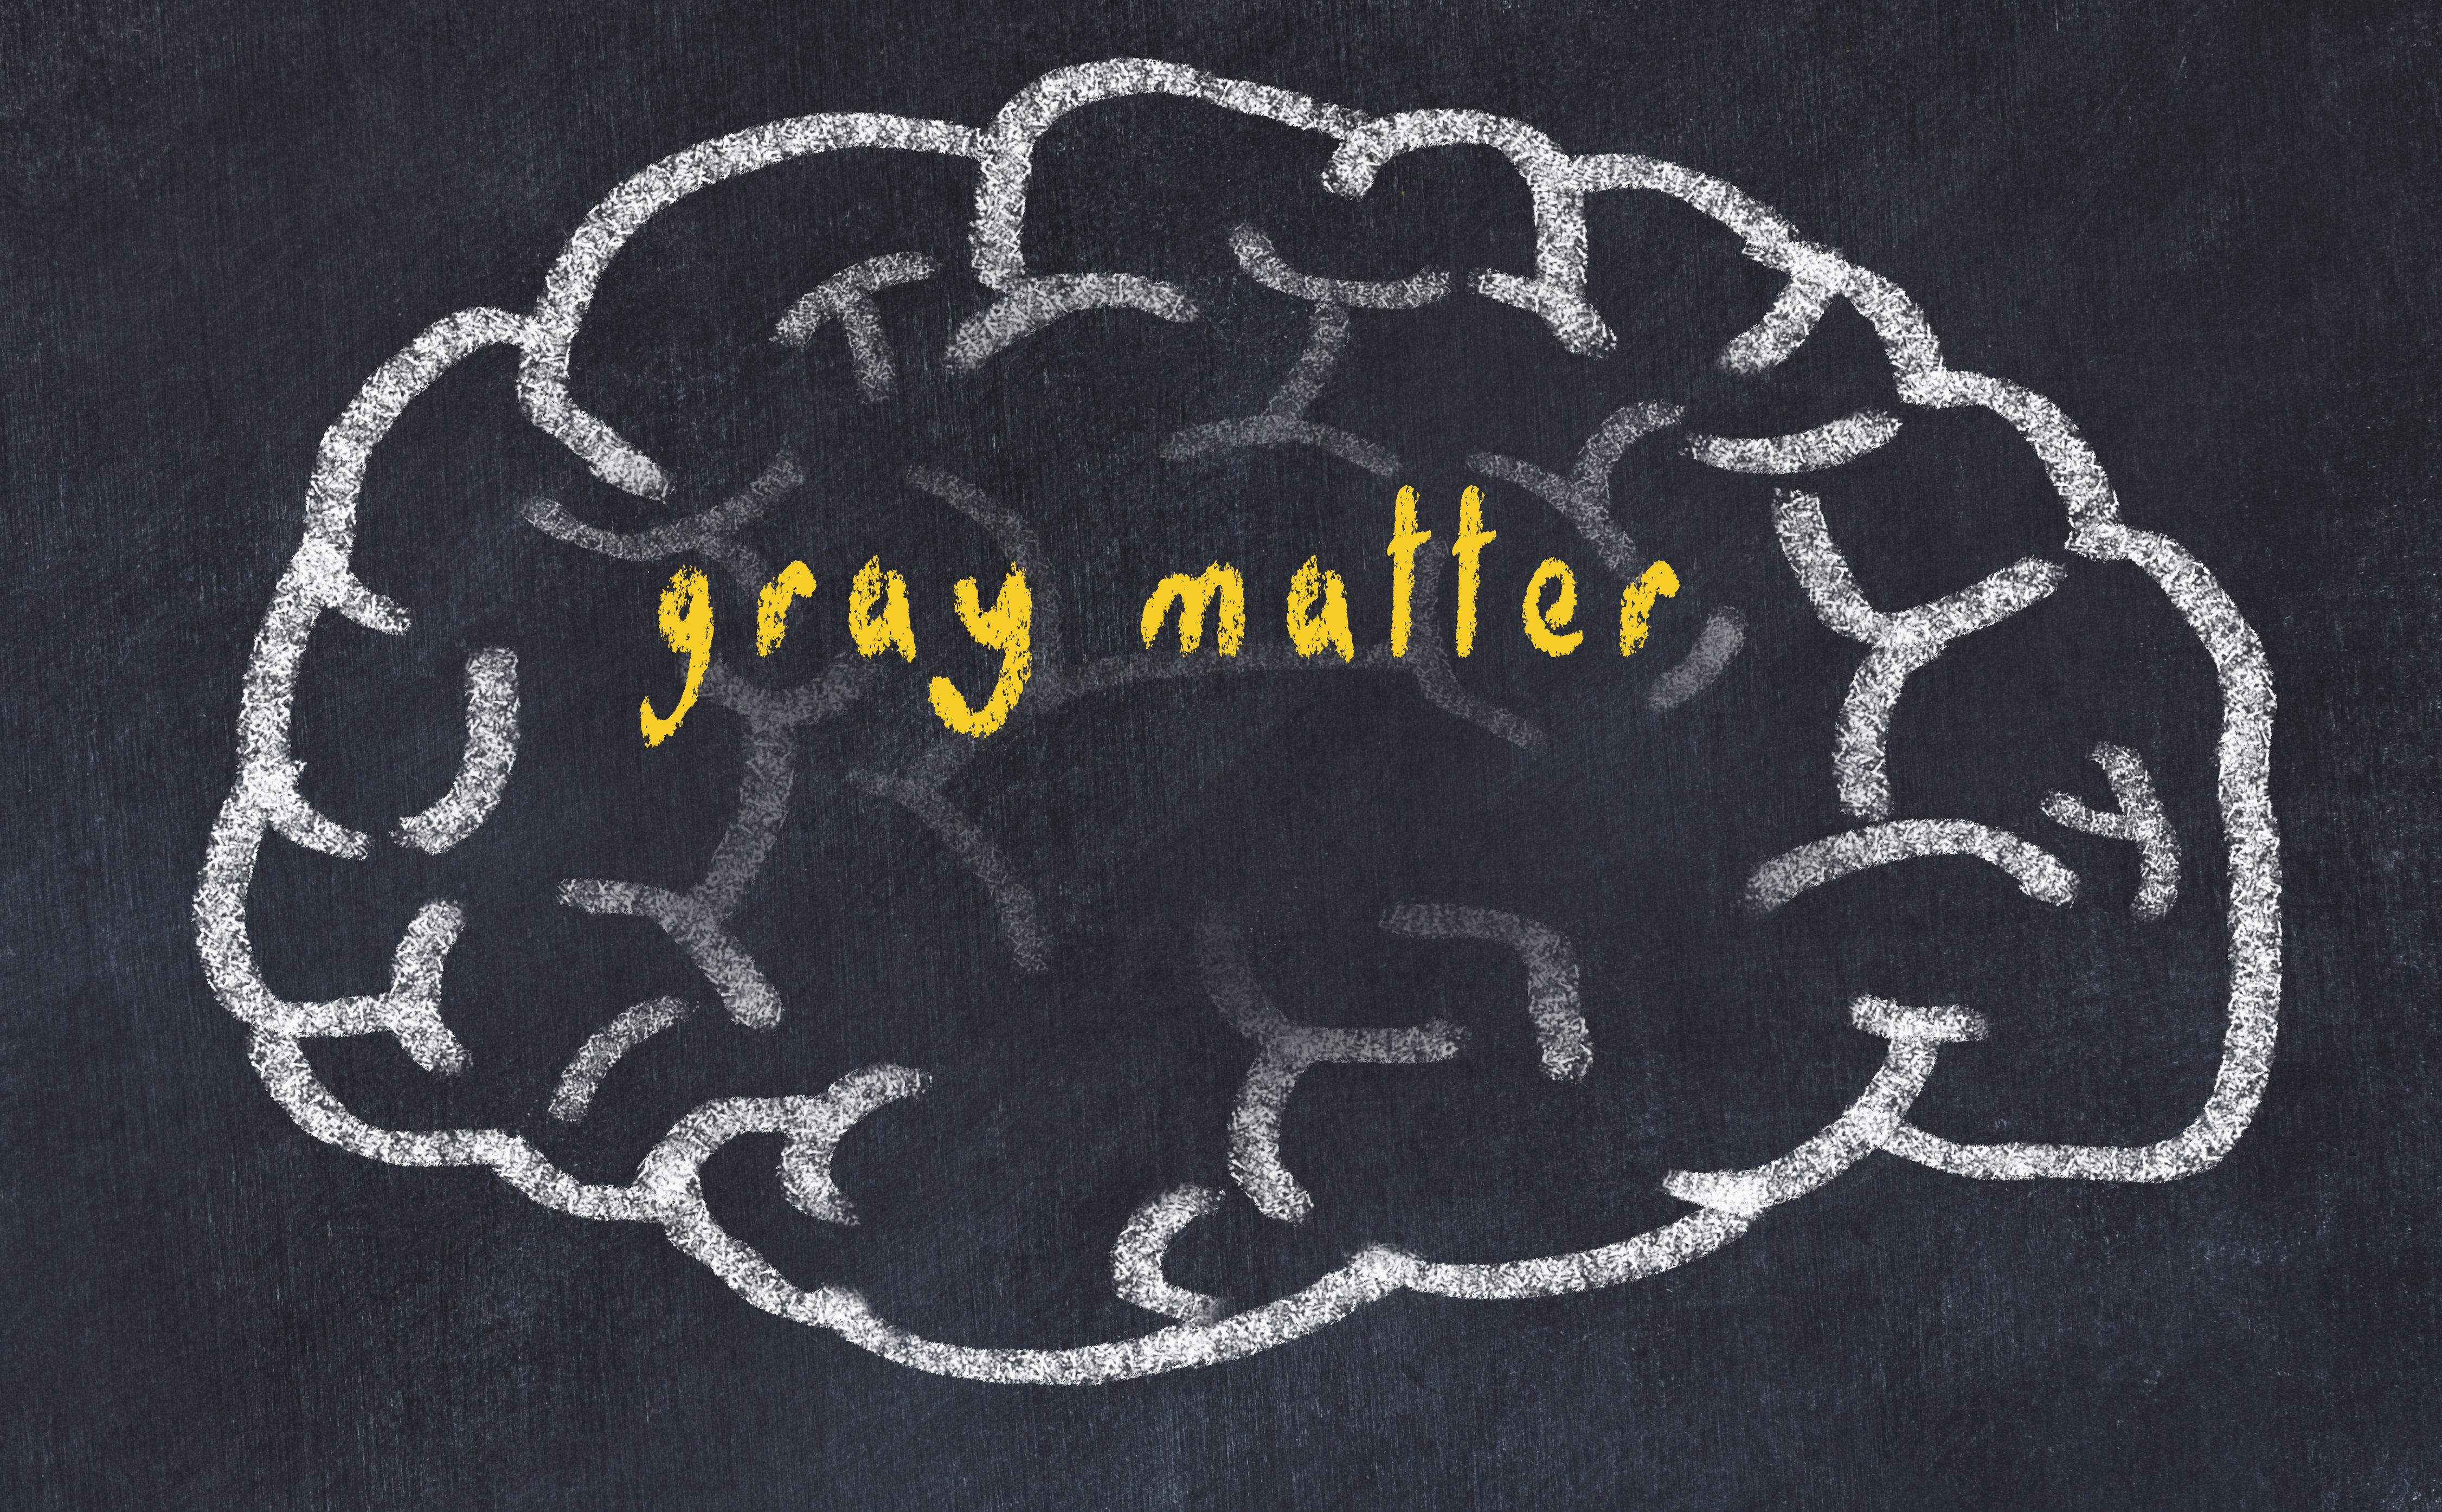 Gray matter is an abundant brain tissue found in the cerebellum, brain stem, and cerebrum | image credit: iushakovsky - stock.adobe.com